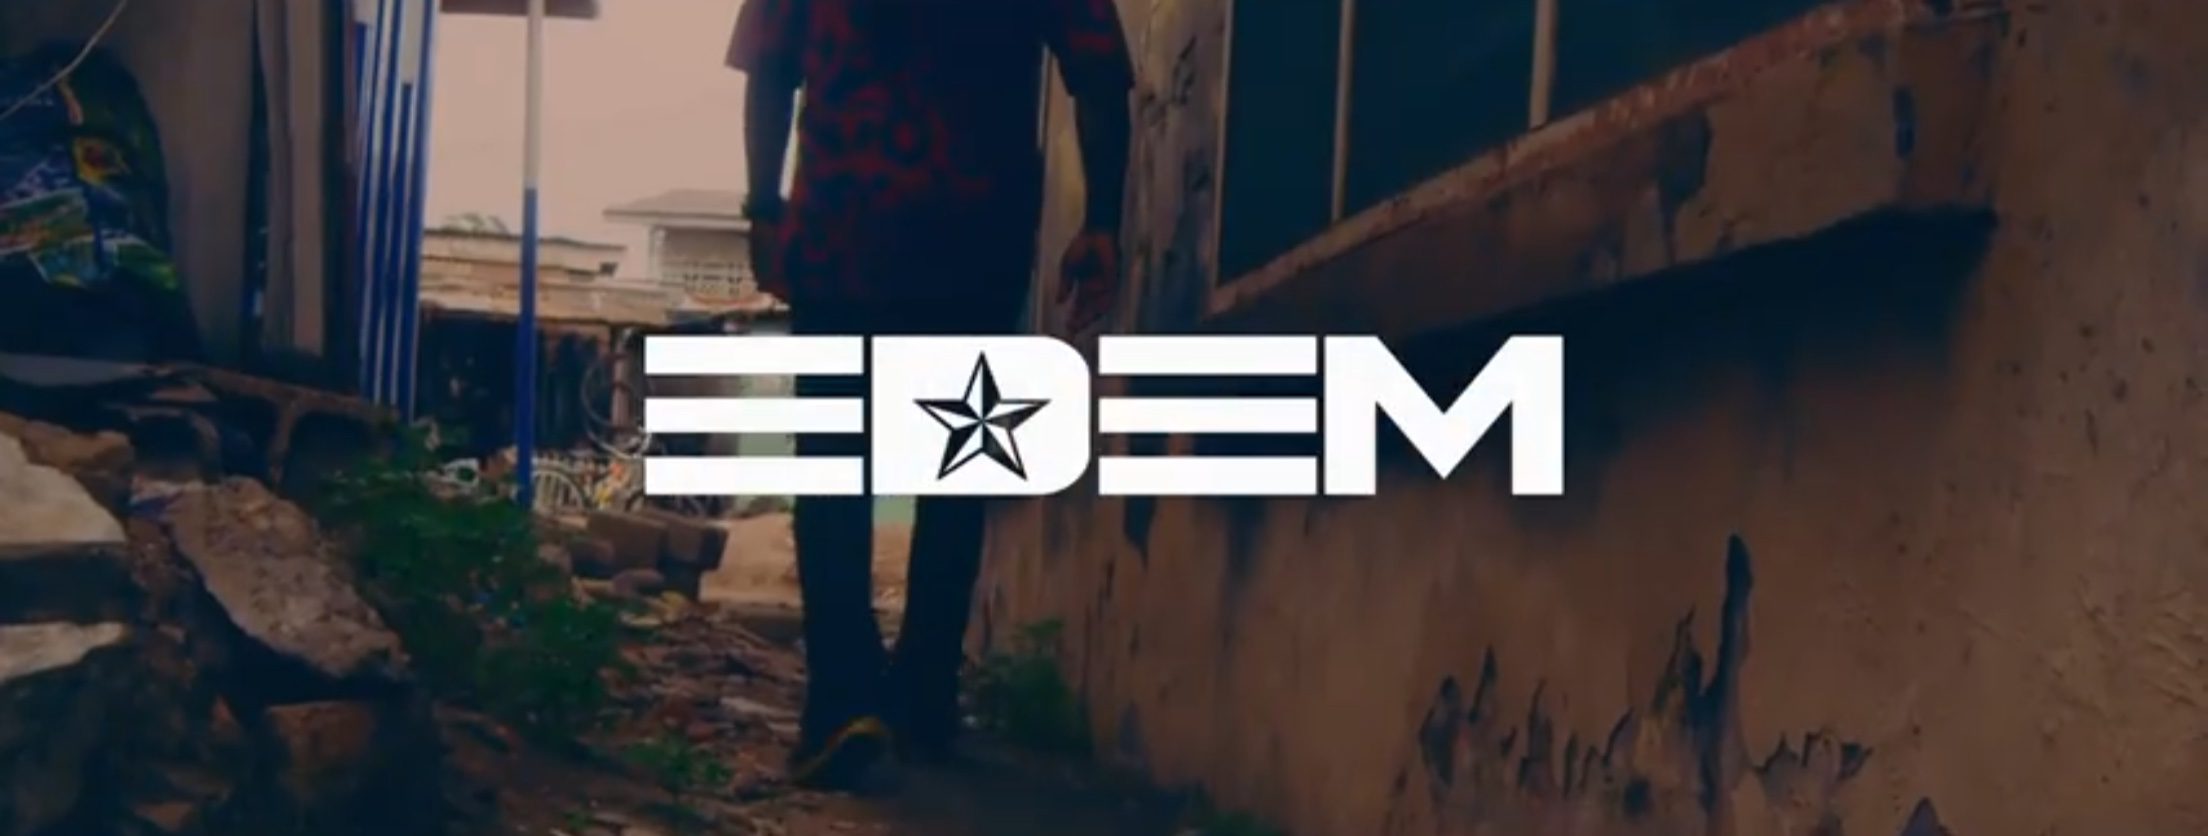 Video/Audio: Edem – Fiefour